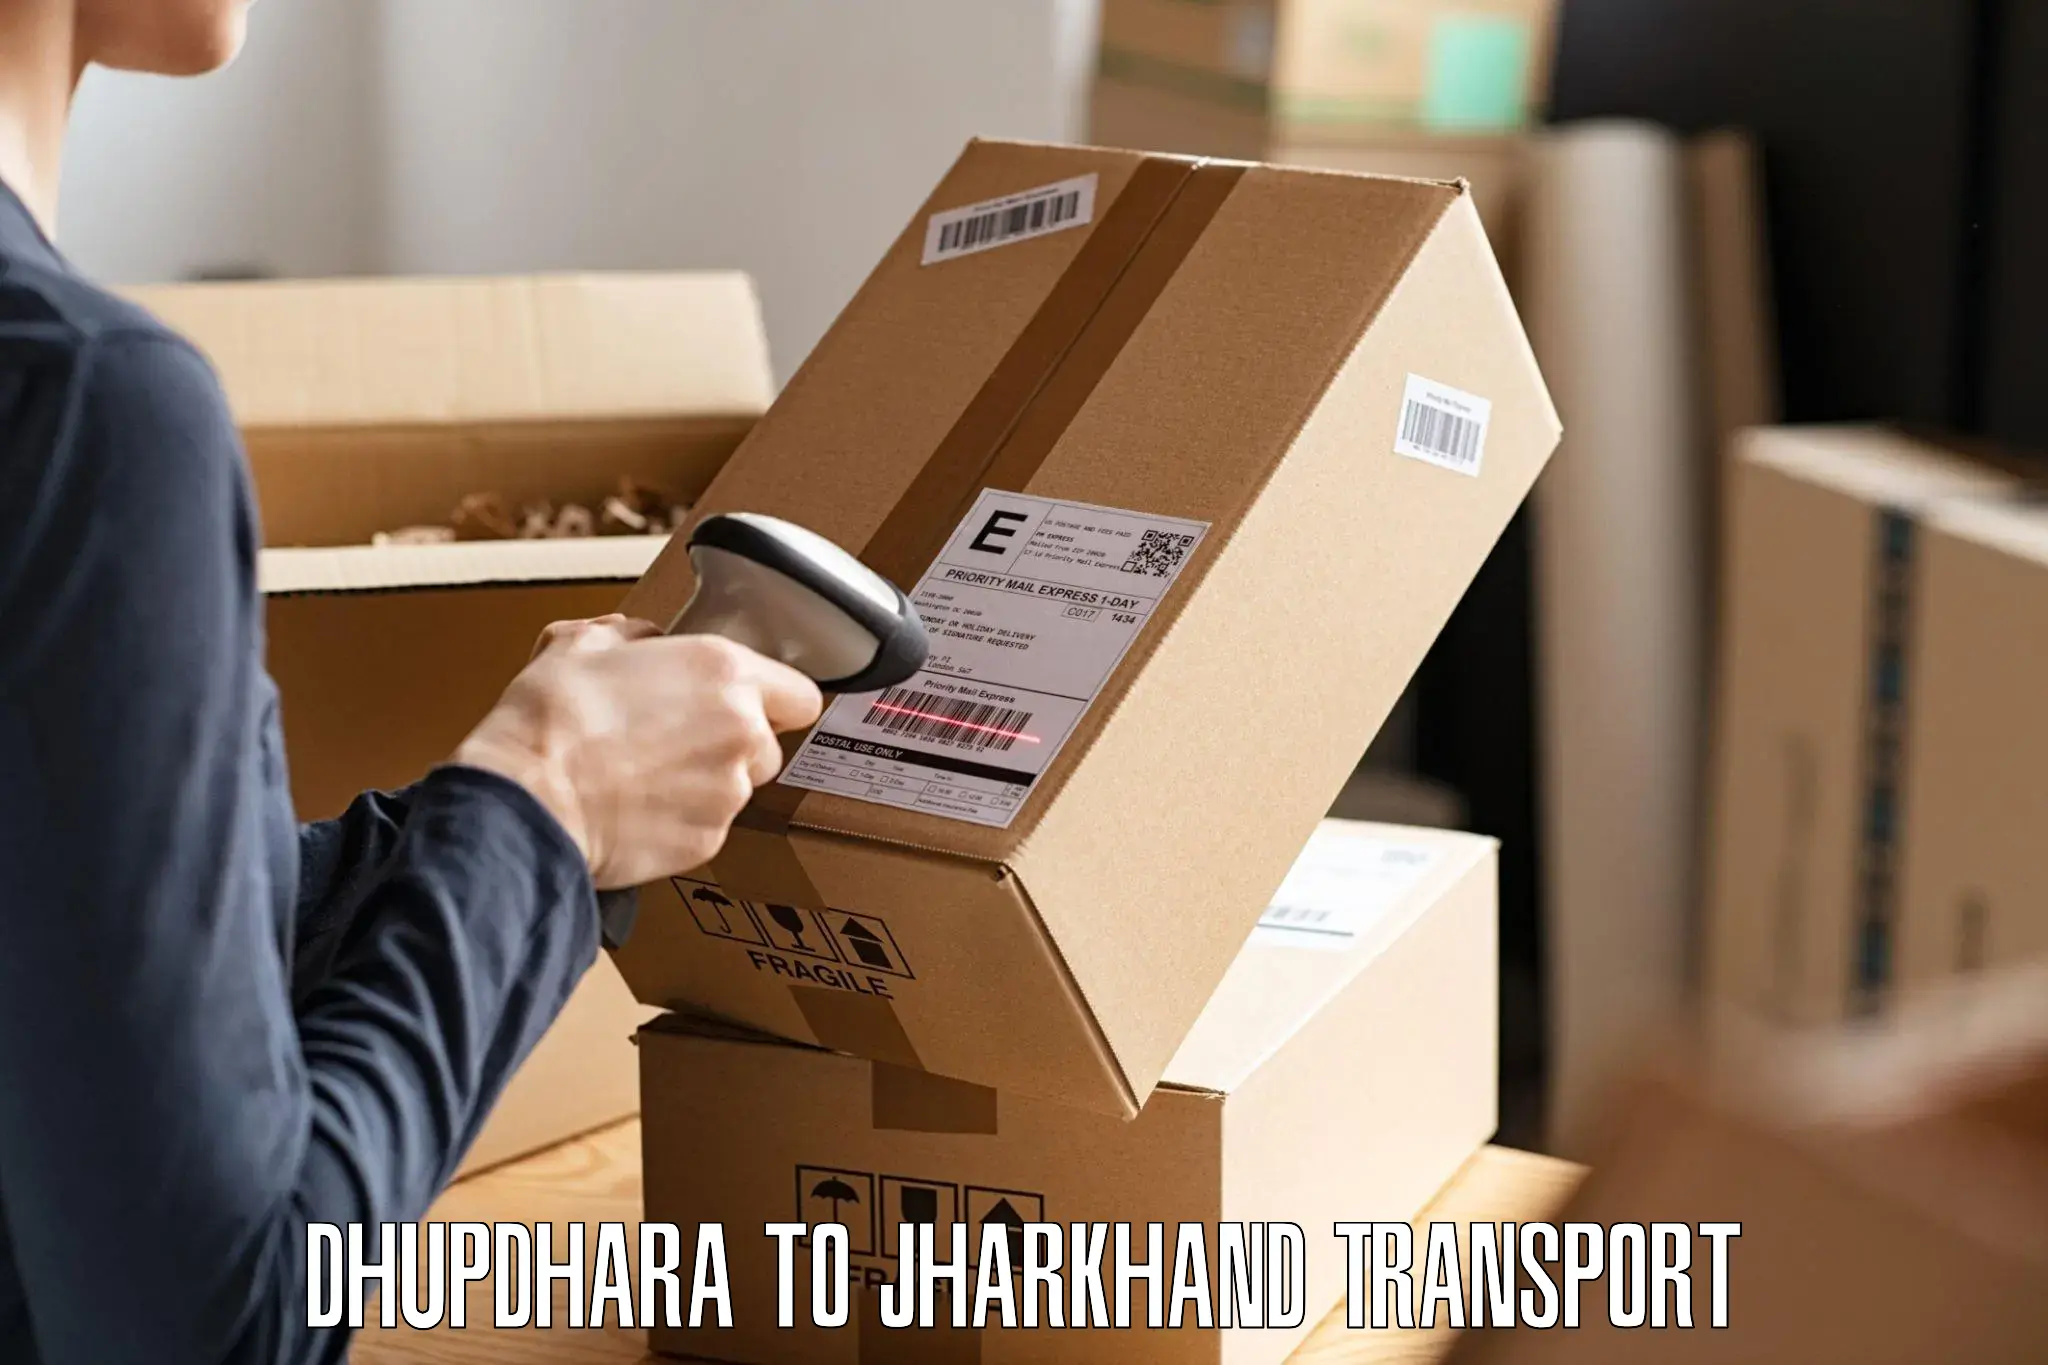 Delivery service Dhupdhara to Shikaripara